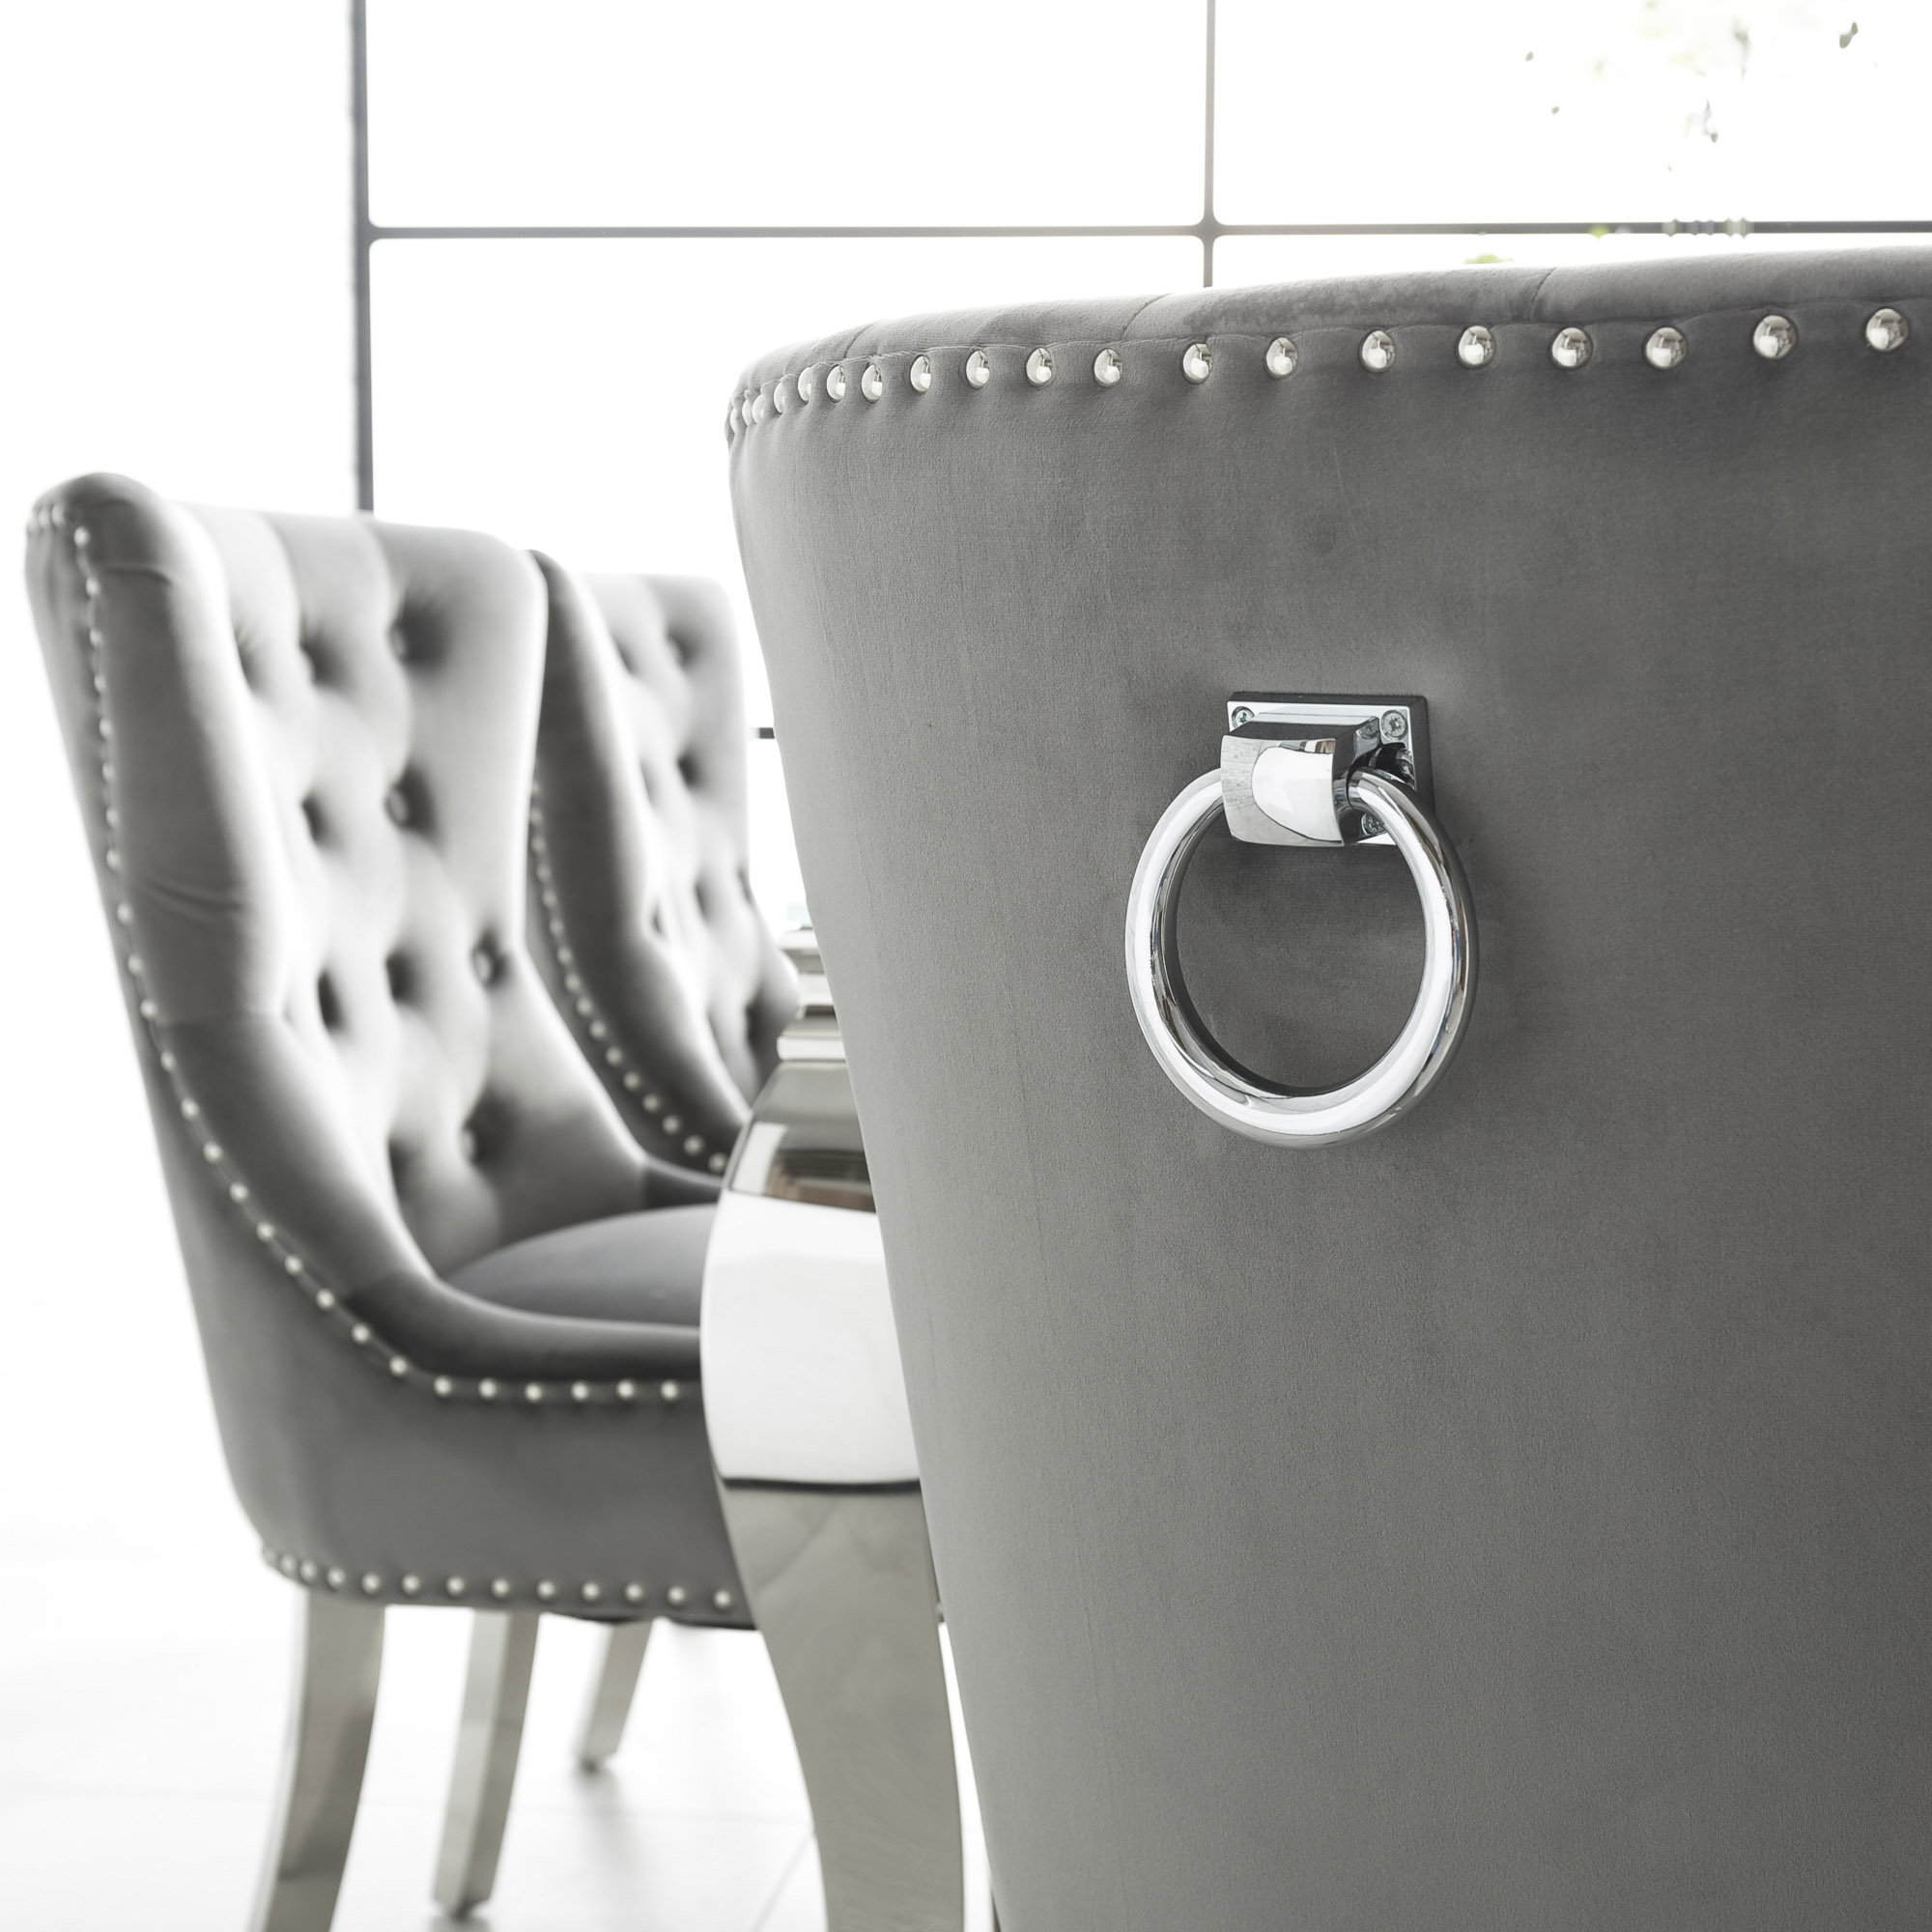 Set of 6 Knightsbridge Grey Brushed Velvet Dining Chair – Steel Legs